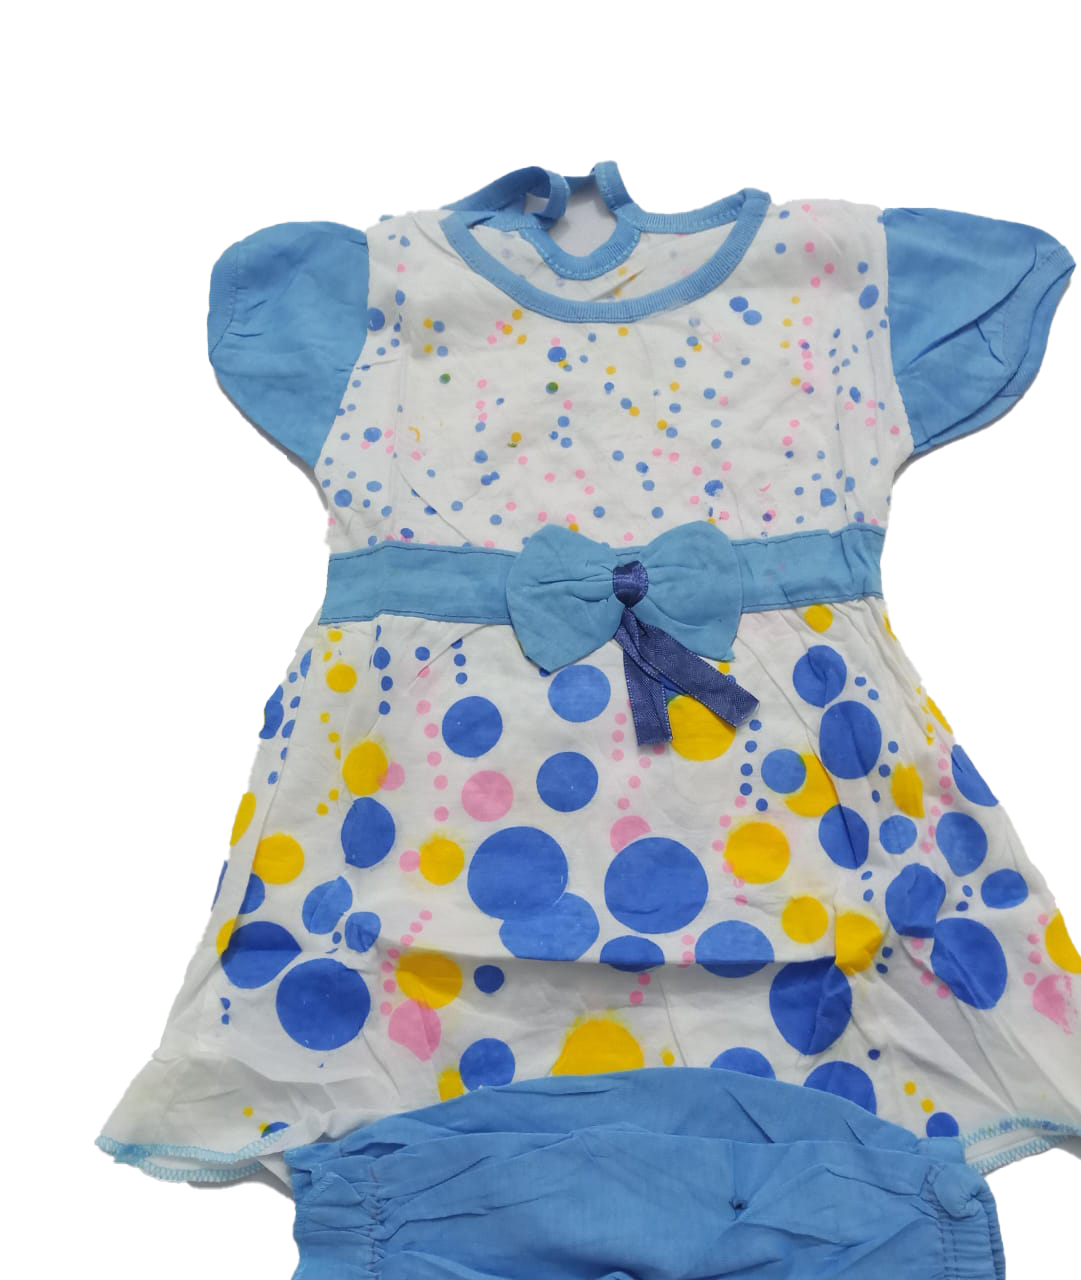 Elegant High Quality Newborn Up & Down Clothes Matching Set (Dress & Pants) for Baby Girls | BLC18b